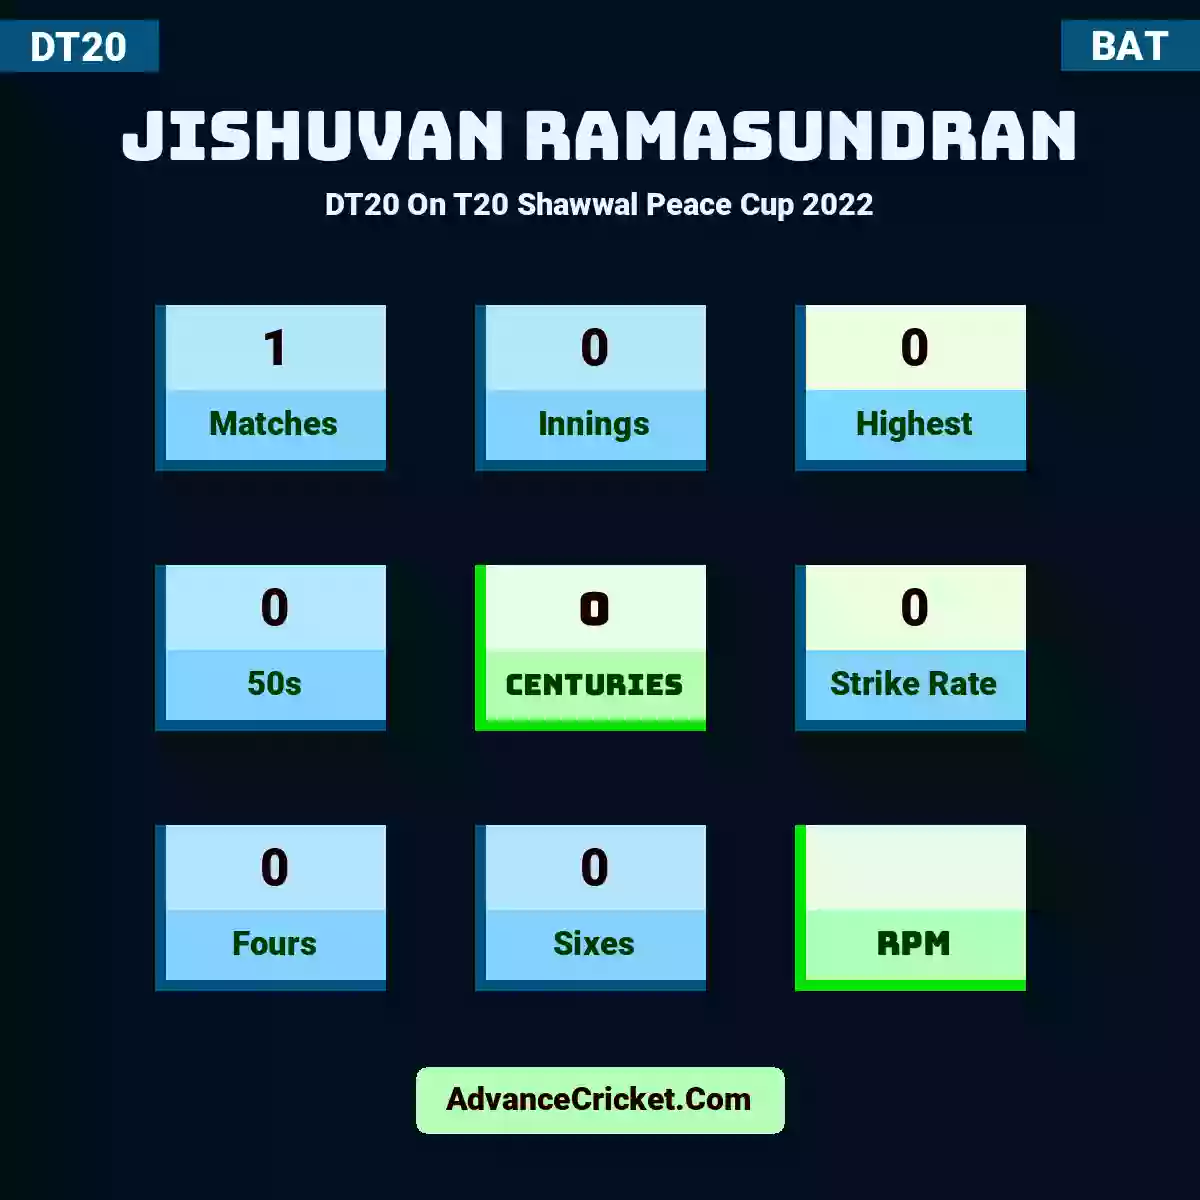 Jishuvan Ramasundran DT20  On T20 Shawwal Peace Cup 2022, Jishuvan Ramasundran played 1 matches, scored 0 runs as highest, 0 half-centuries, and 0 centuries, with a strike rate of 0. J.Ramasundran hit 0 fours and 0 sixes.